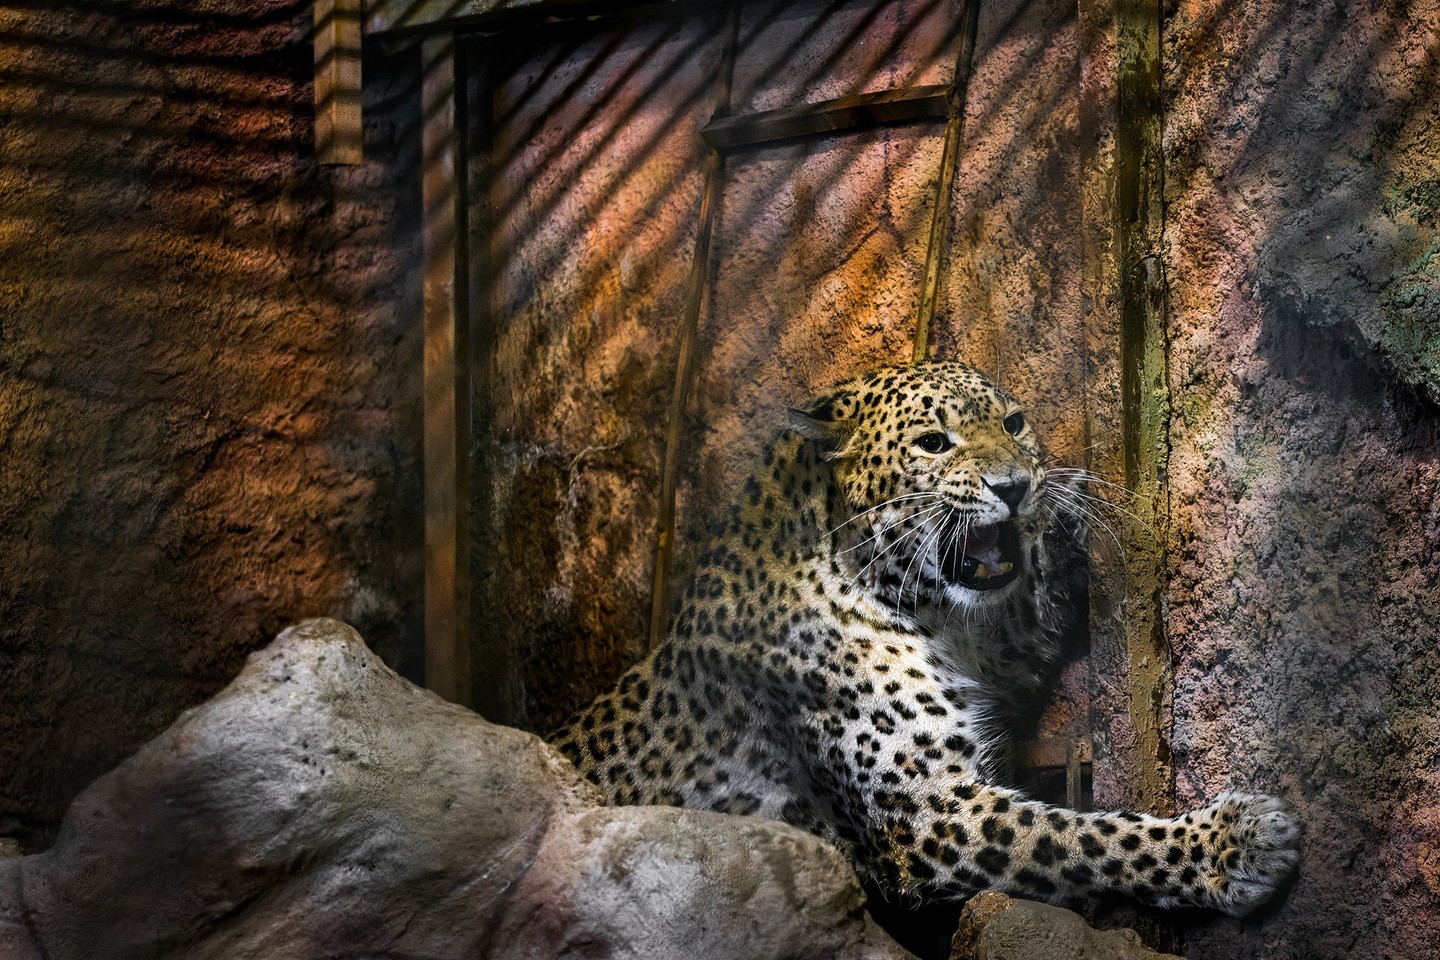 Photo by jasperdoest | An Anatolian leopard, an endangered speci